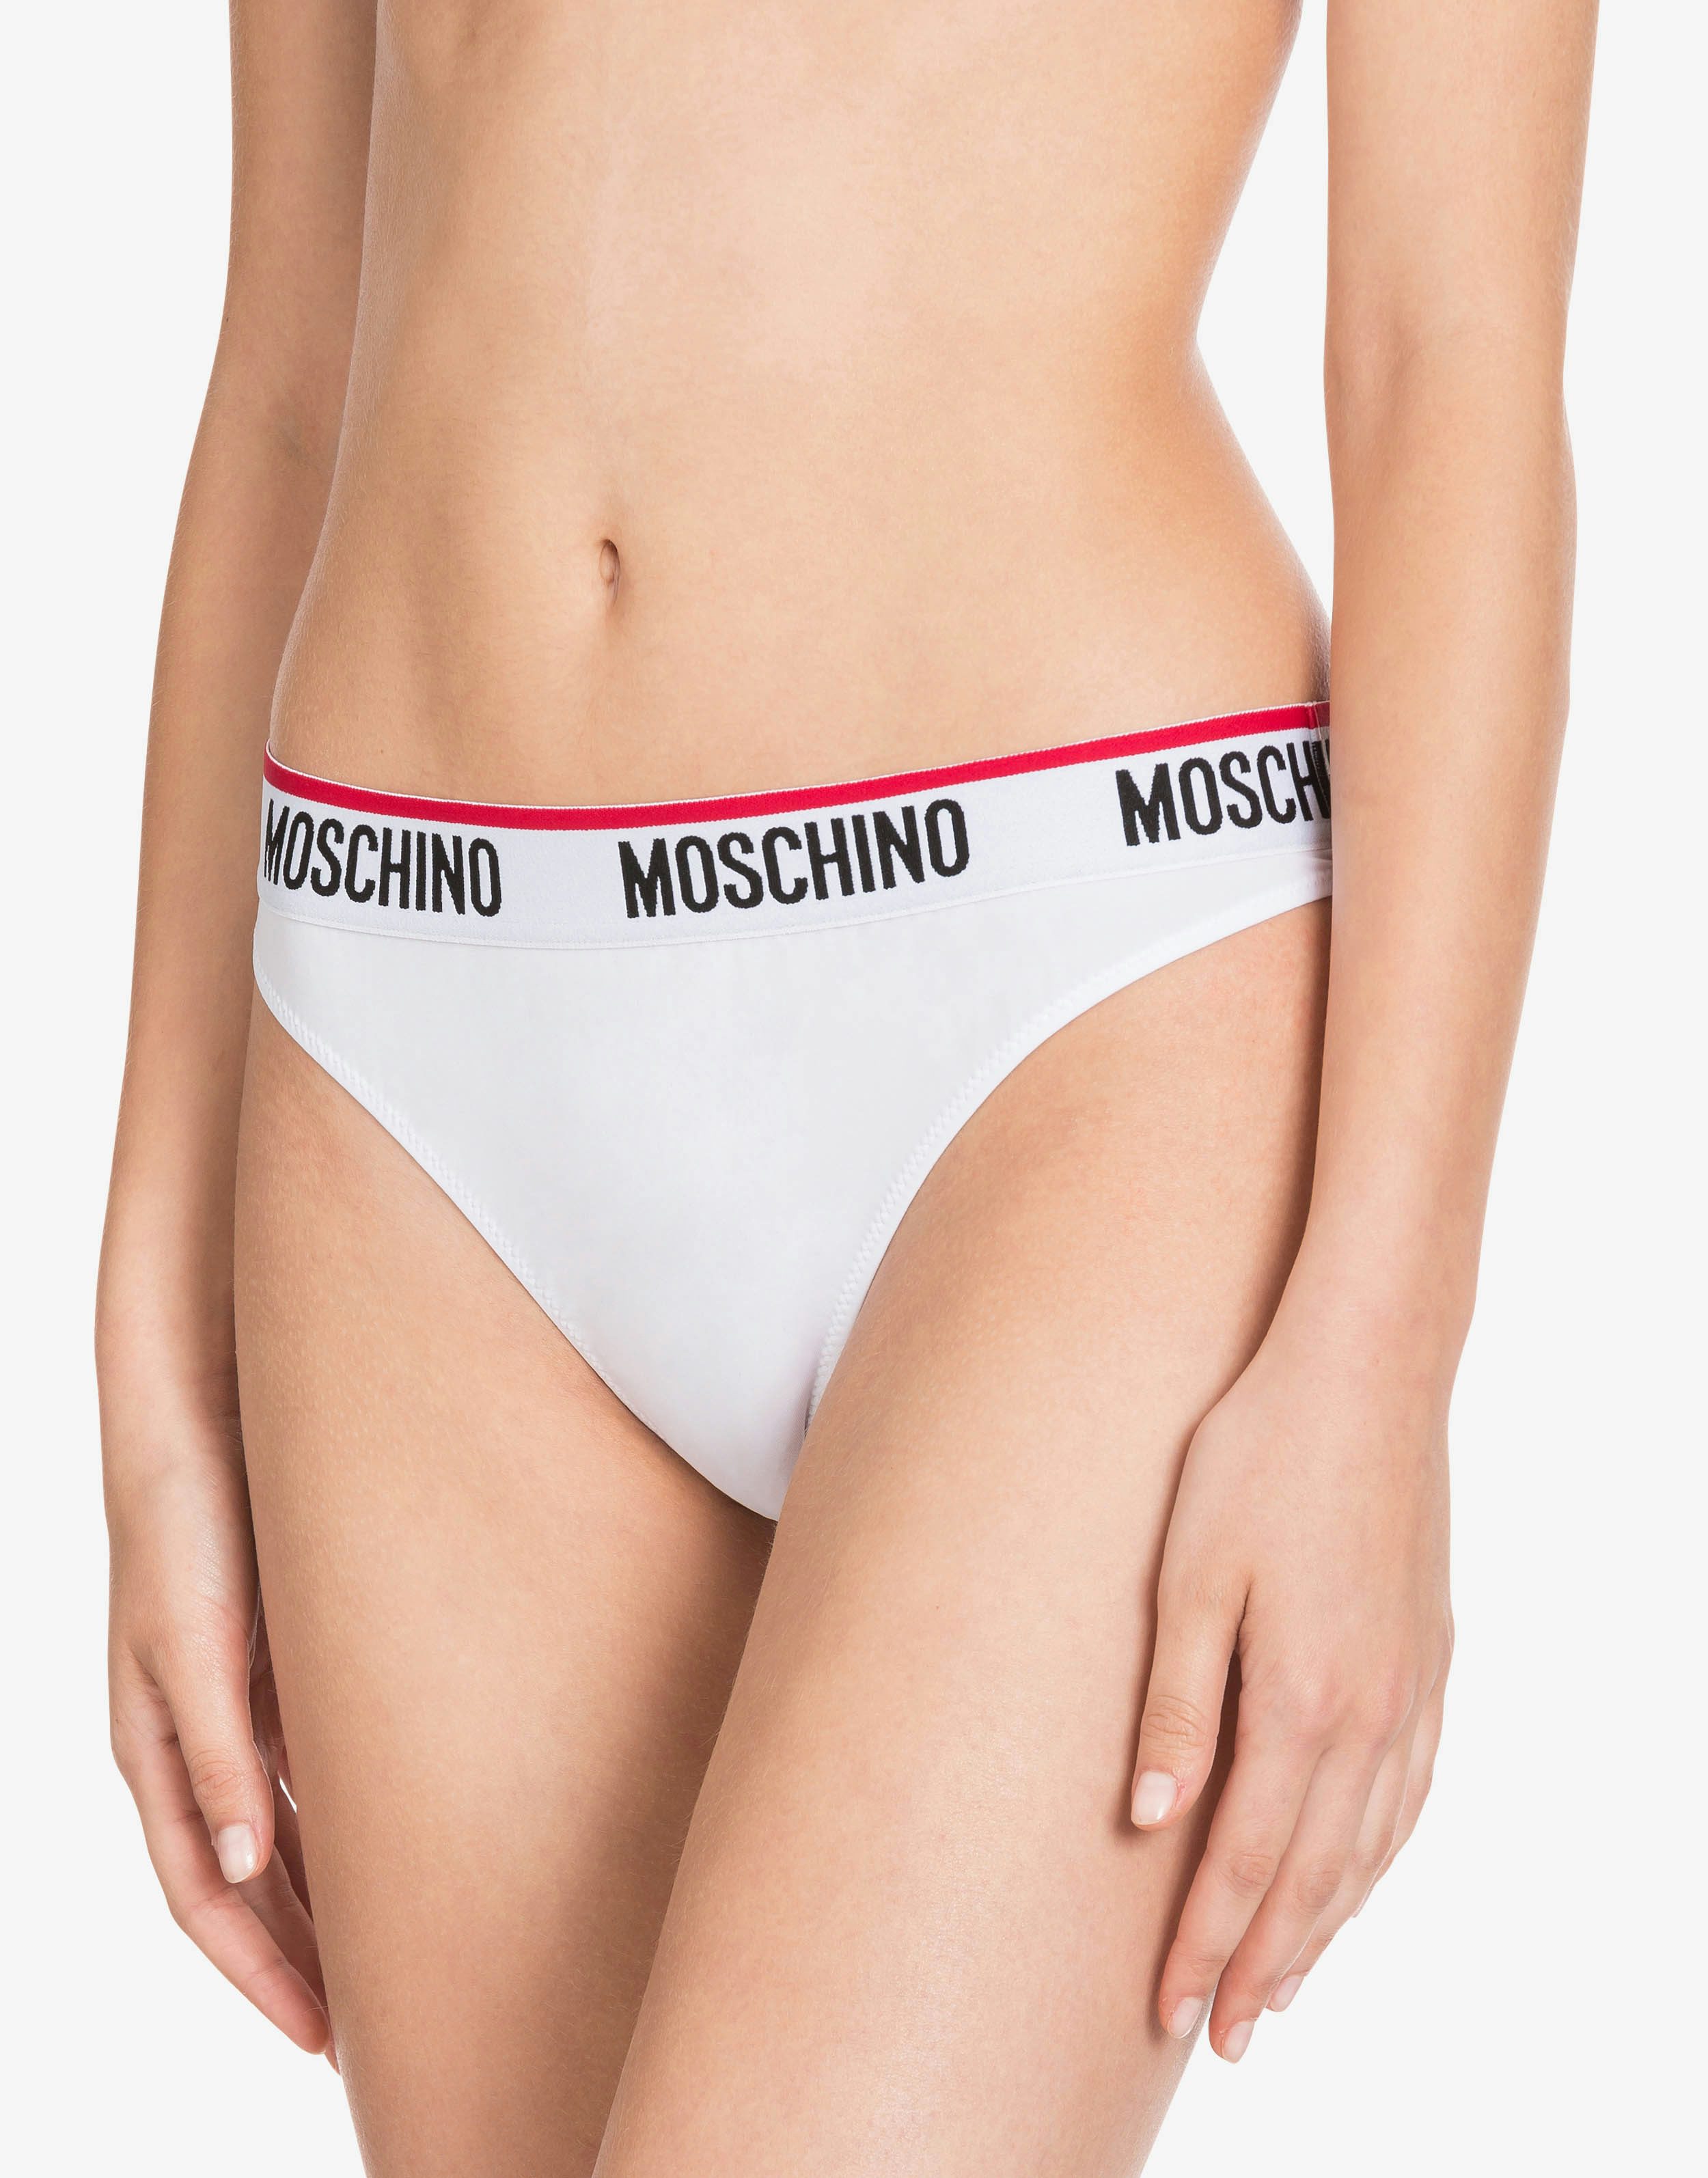 Moschino Women's Underwear - Official Store USA